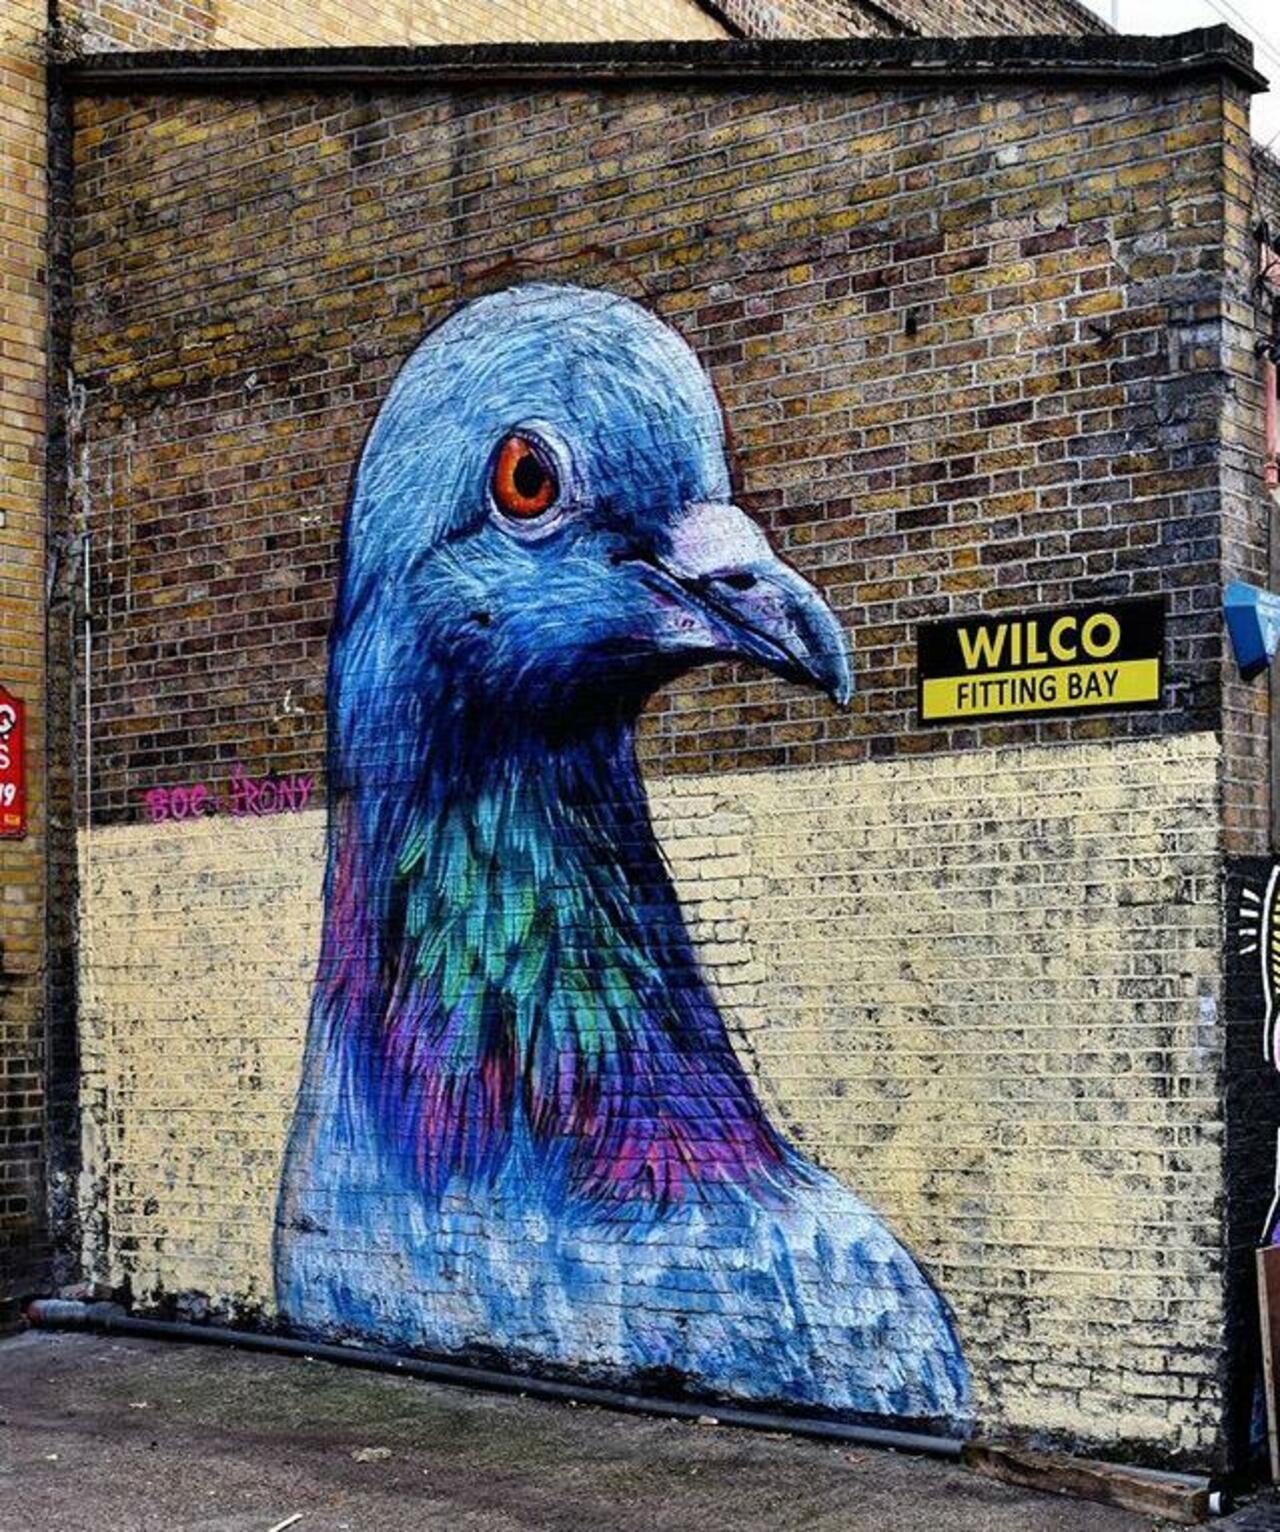 Street Art by Placee Boe & whoamirony in London 

#art #graffiti #mural #streetart http://t.co/qflE8uUfJR